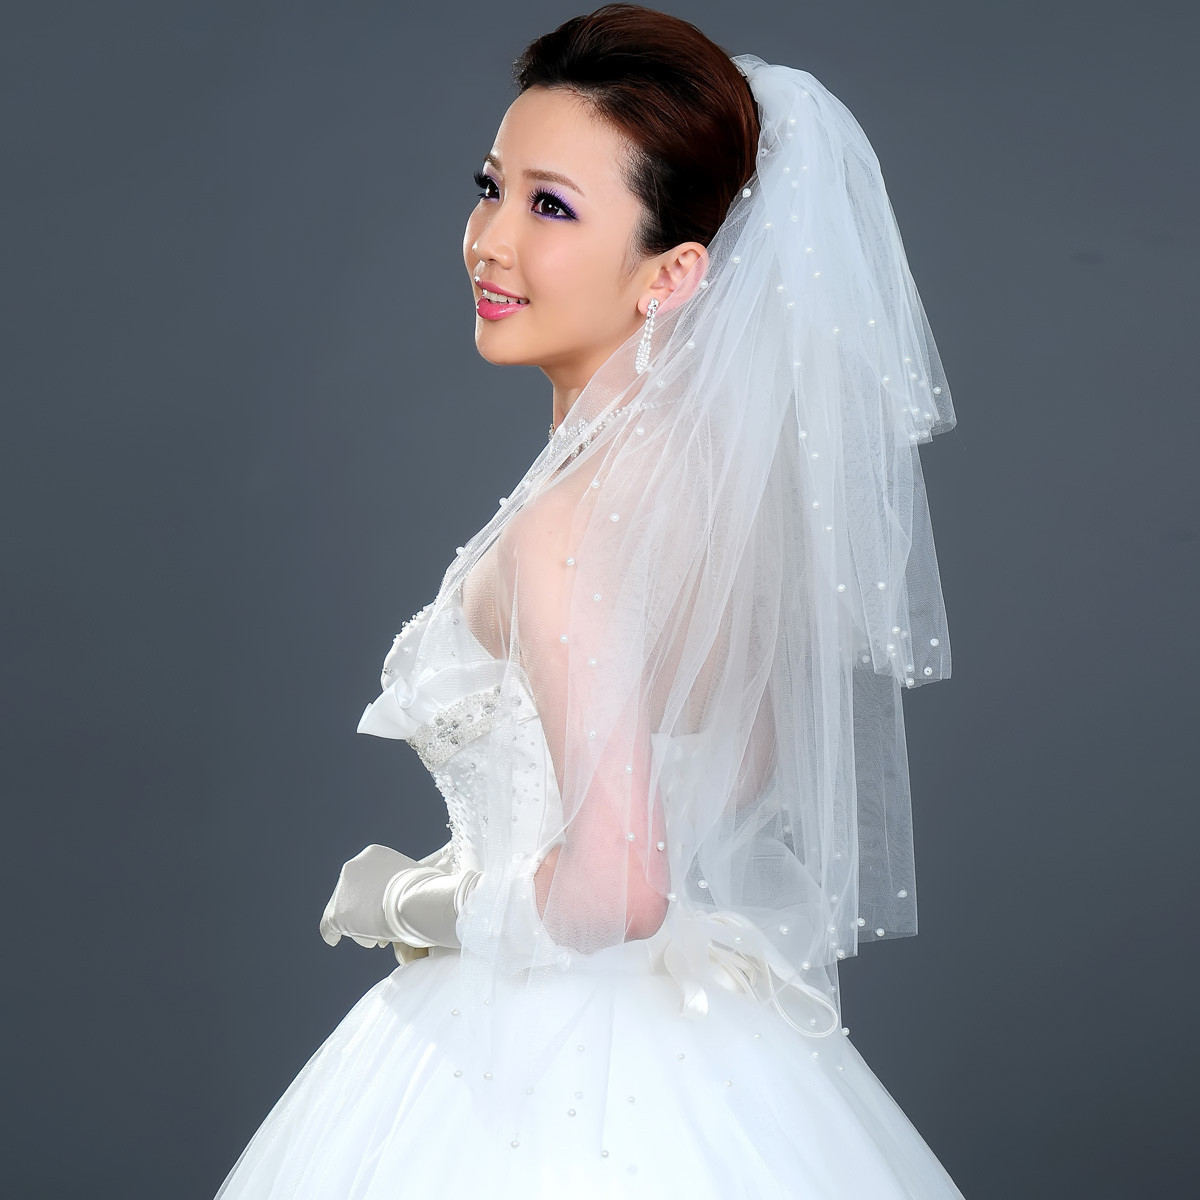 2012 bride wedding long veil pearl veil multi-layer veil aesthetic style t11